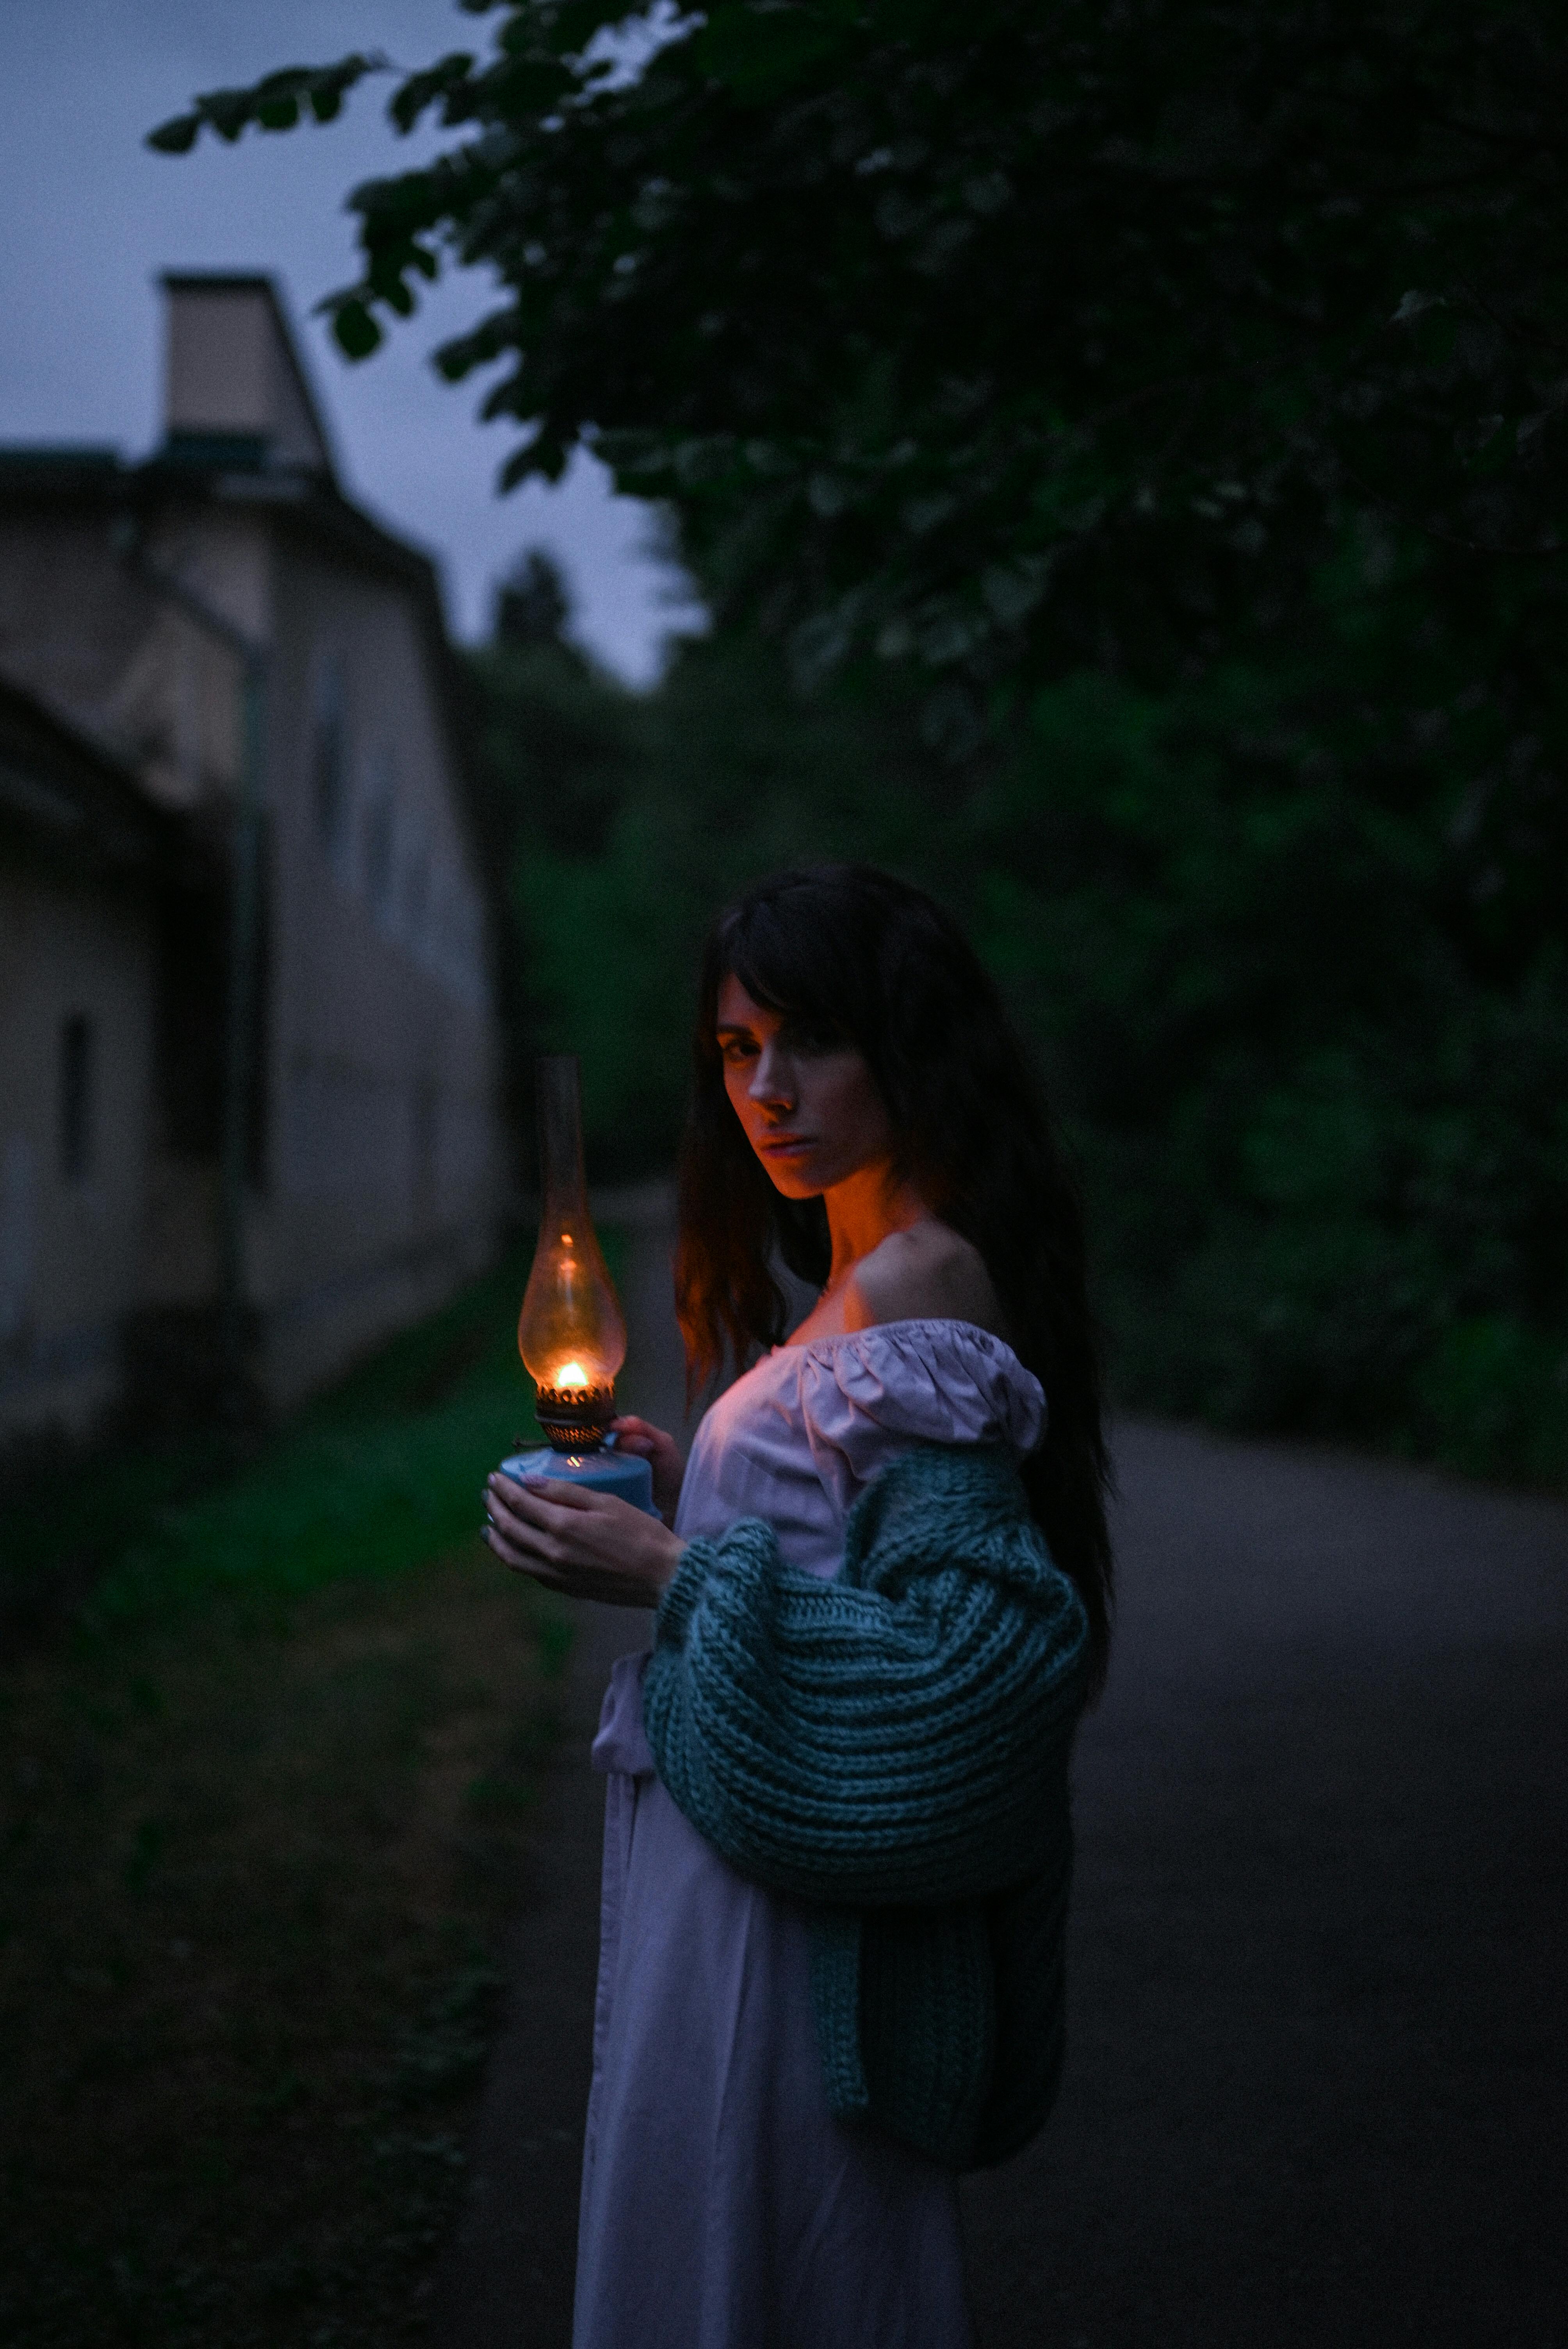 Woman with an old kerosene lamp in the dark | Source: Pexels